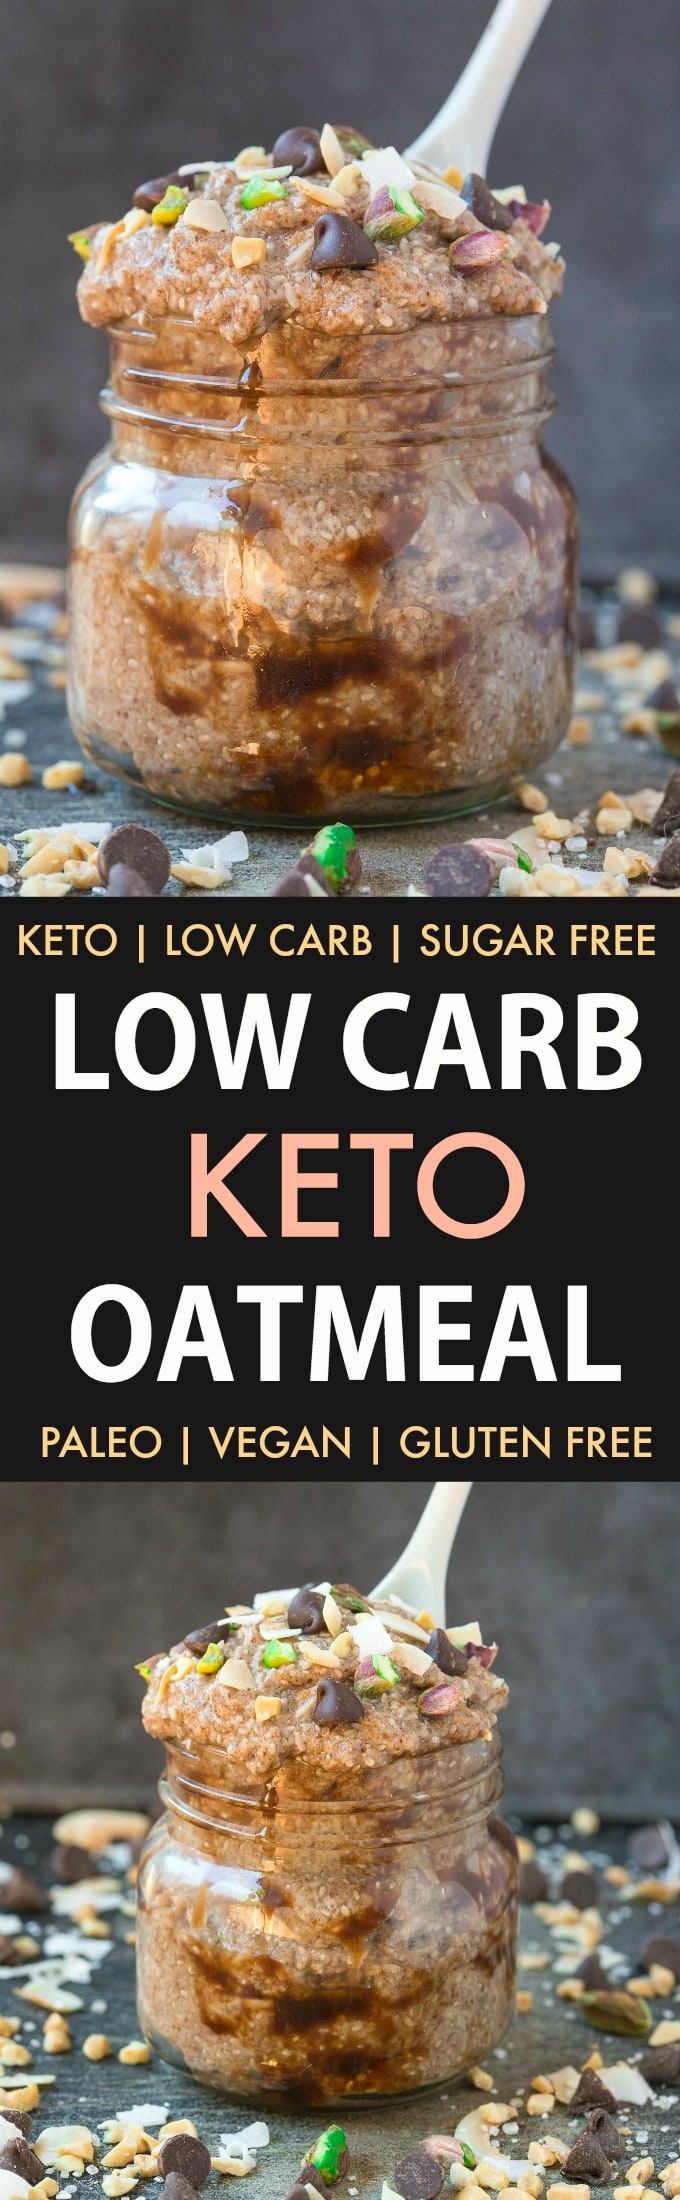 Low Carb Keto Oatmeal 